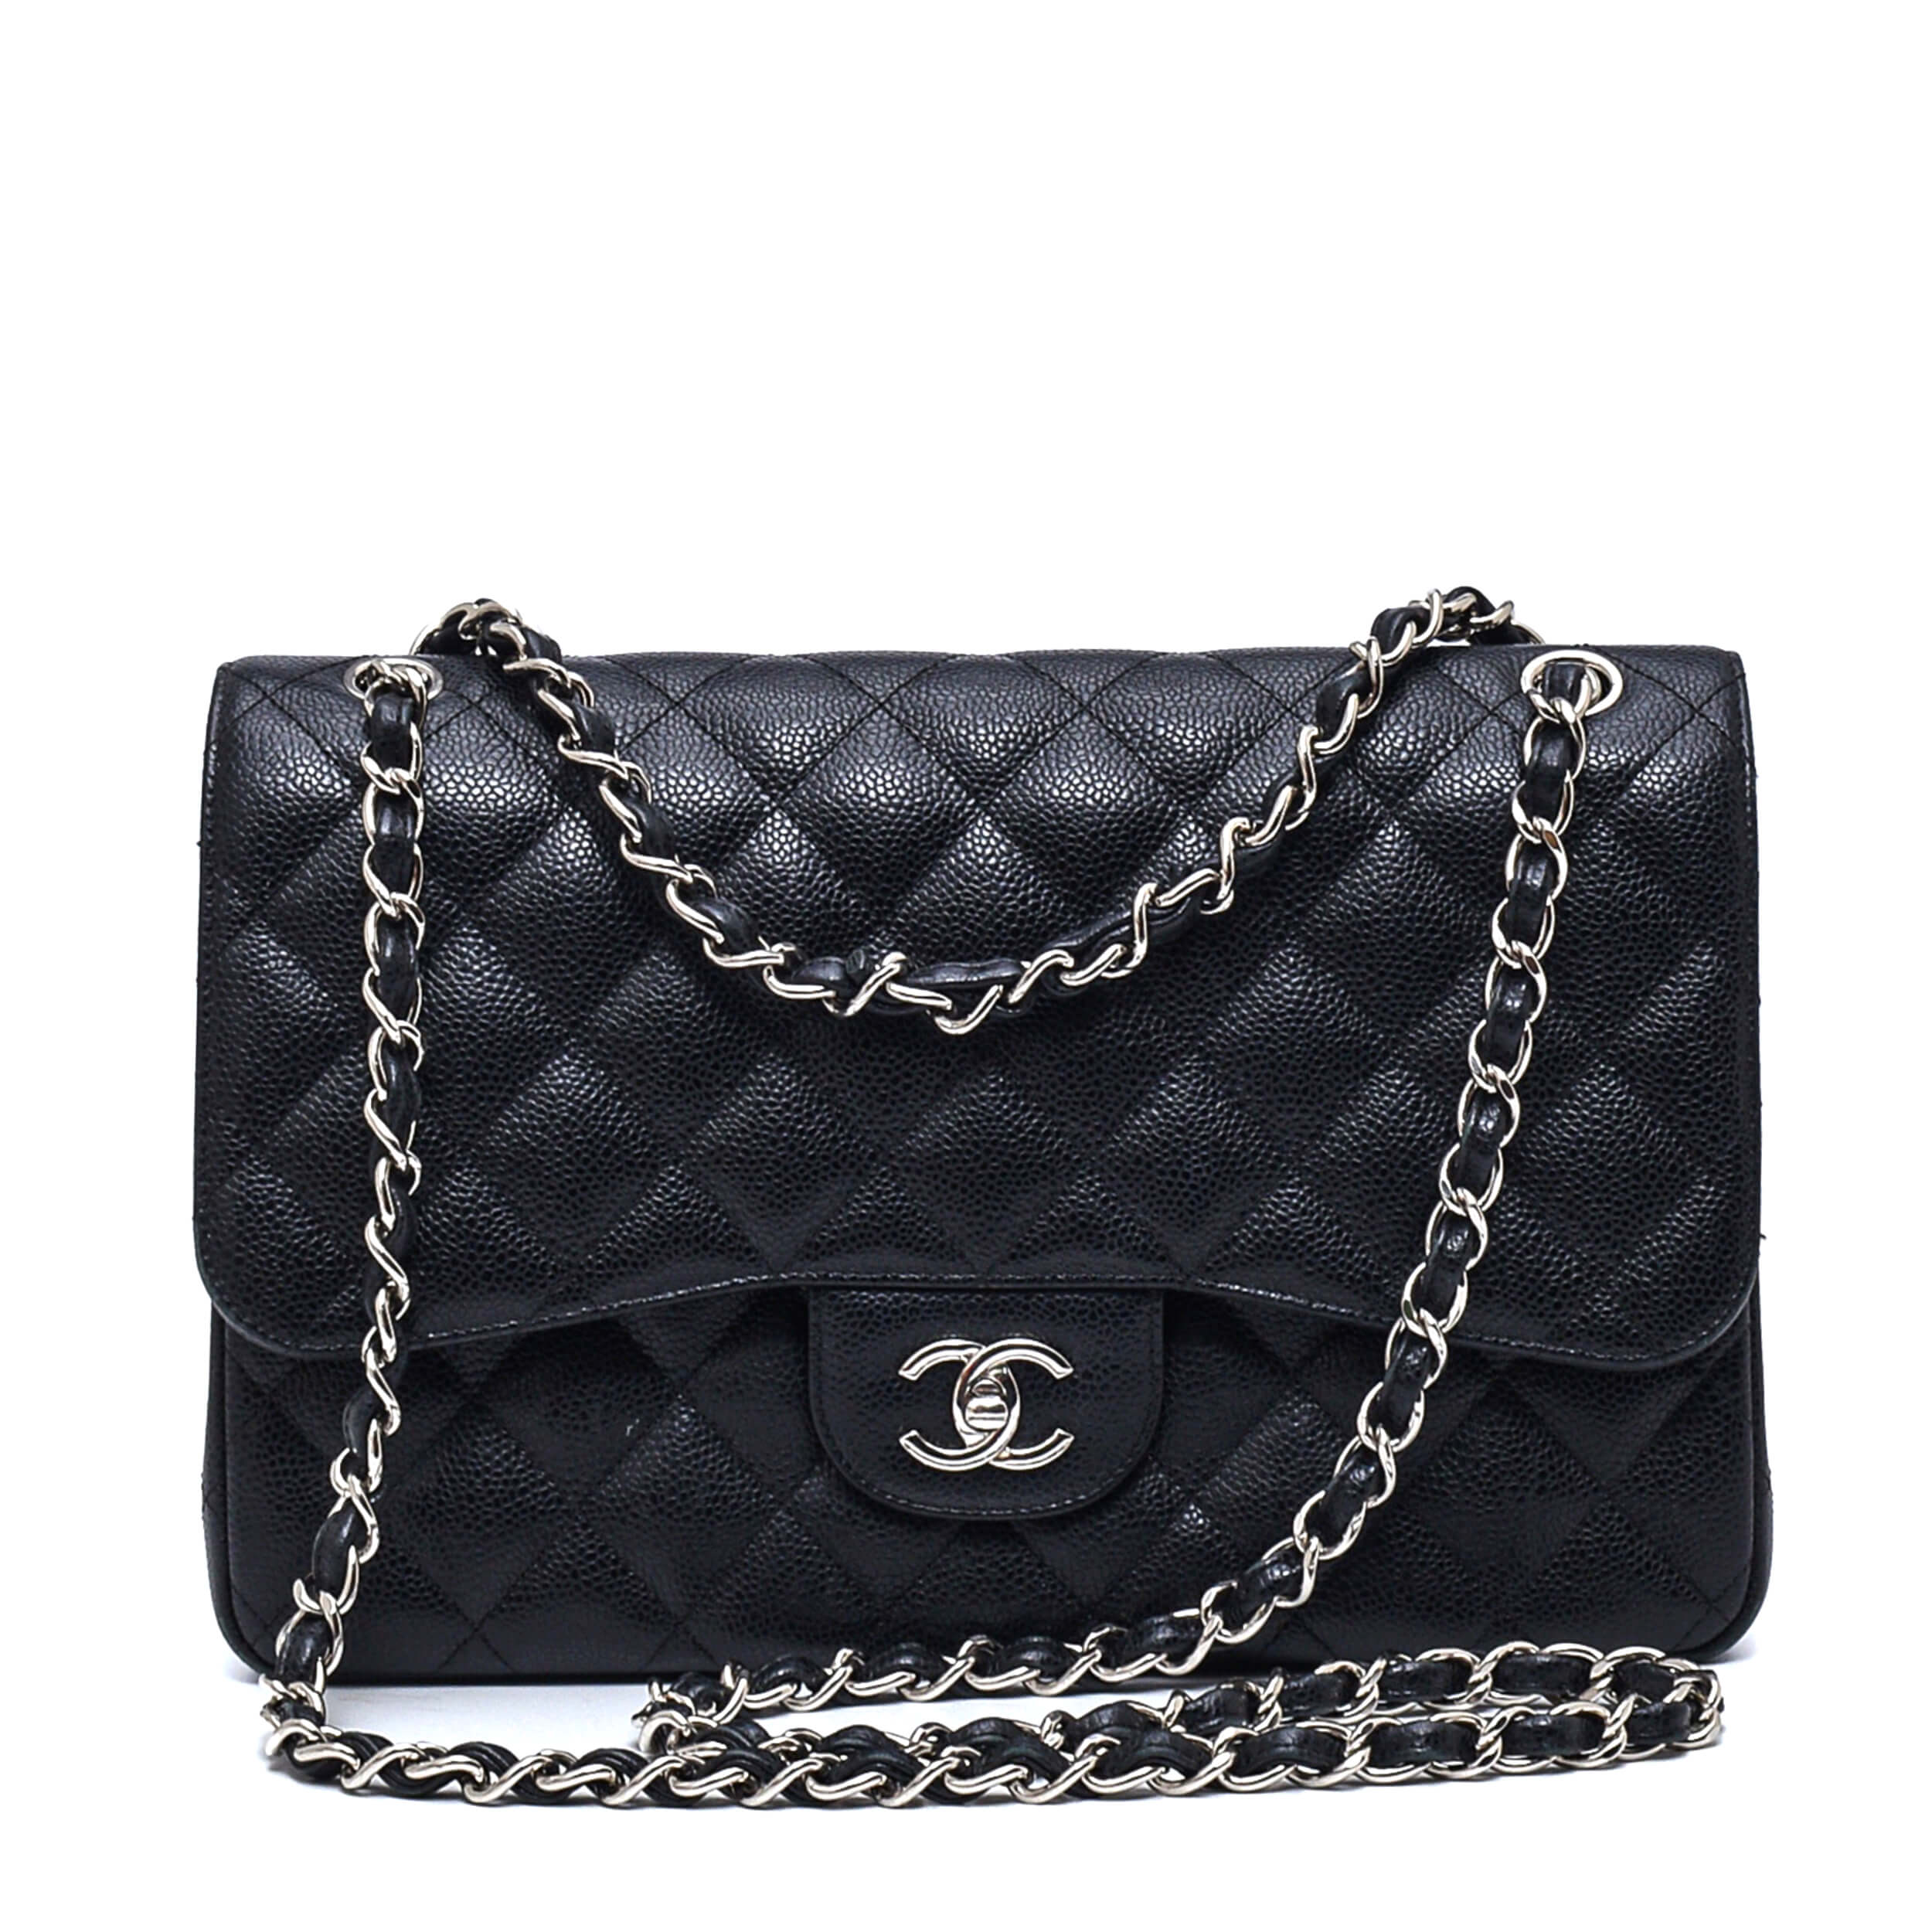 Chanel- Black Caviar Leather Jumbo Doubl Flap Bag